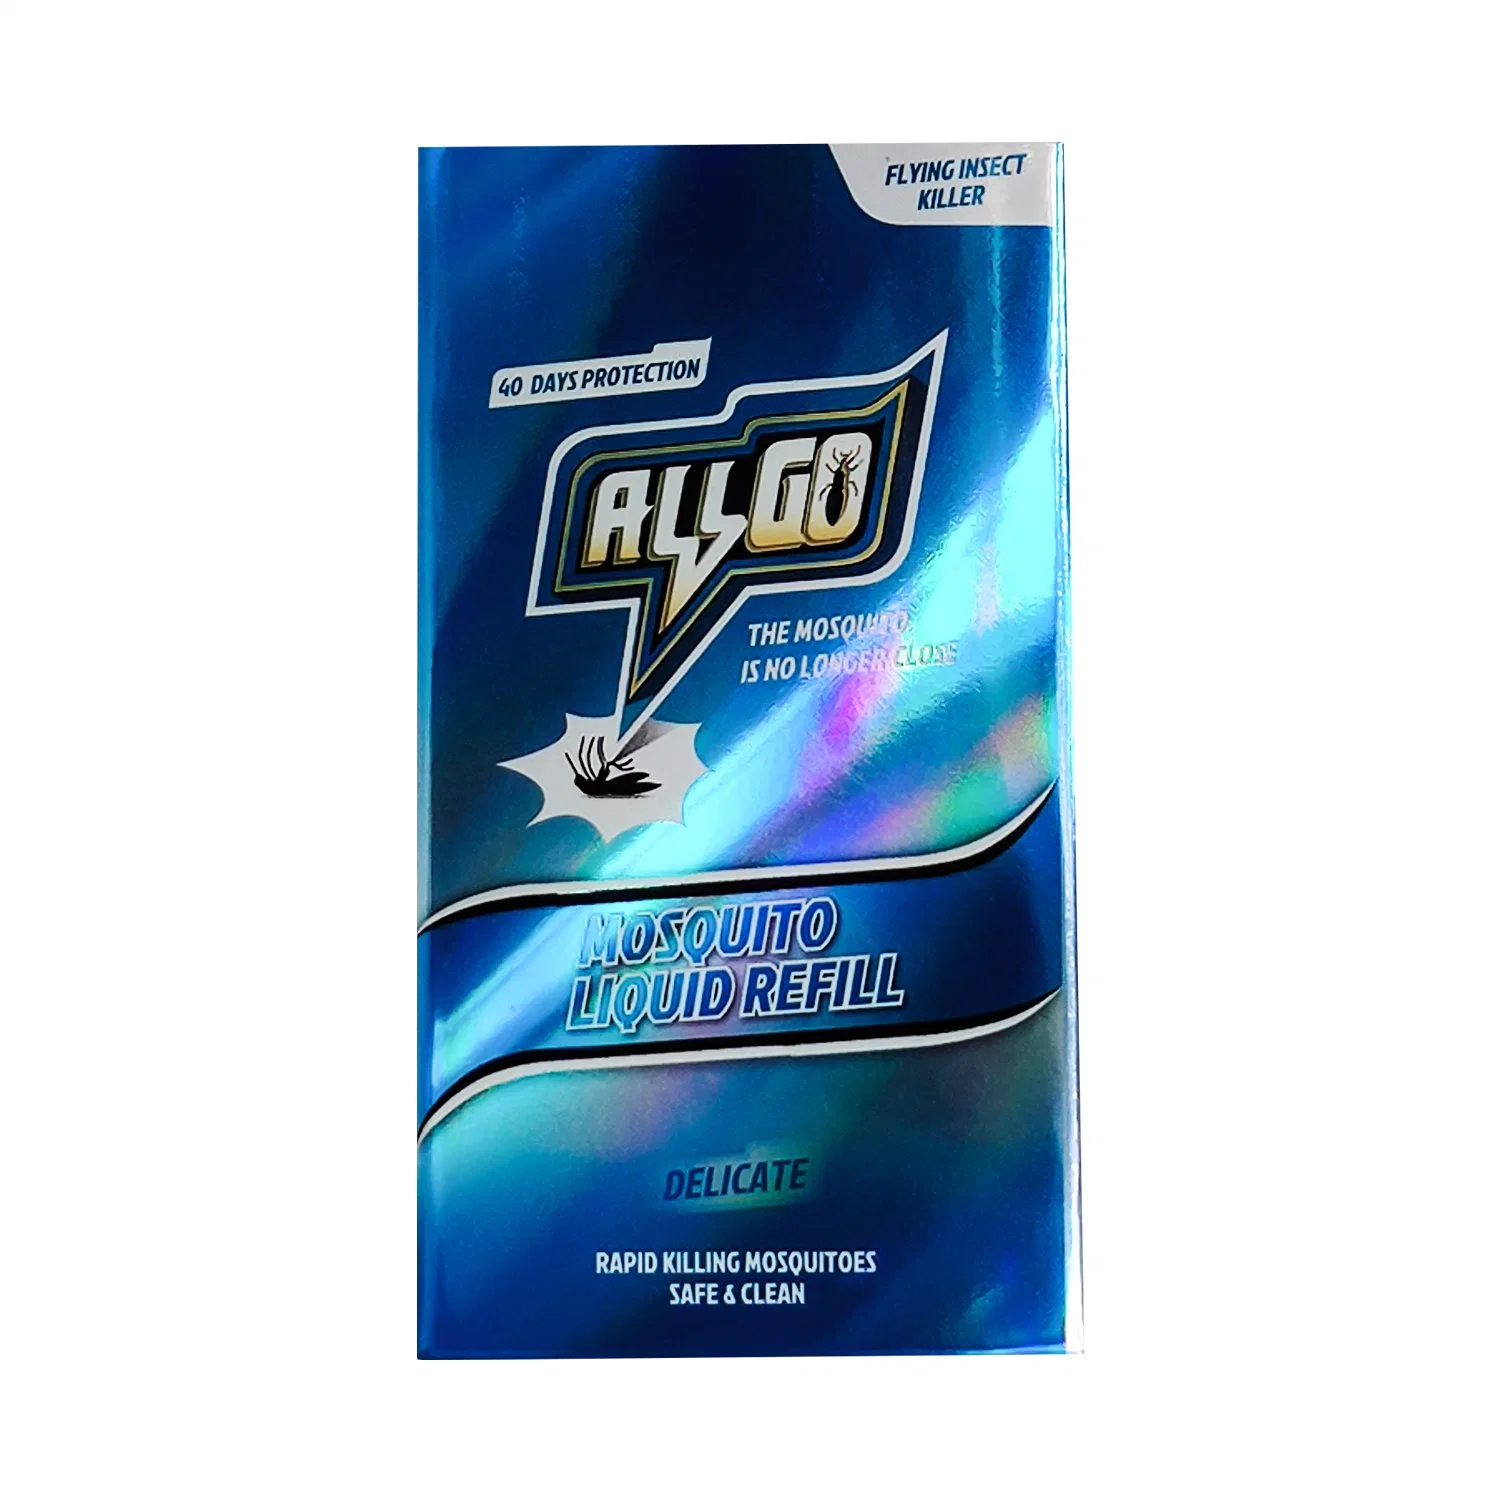 Allgo Daily Chemical Household Necessity Mosquito Liquid Refill Mosquito Killer